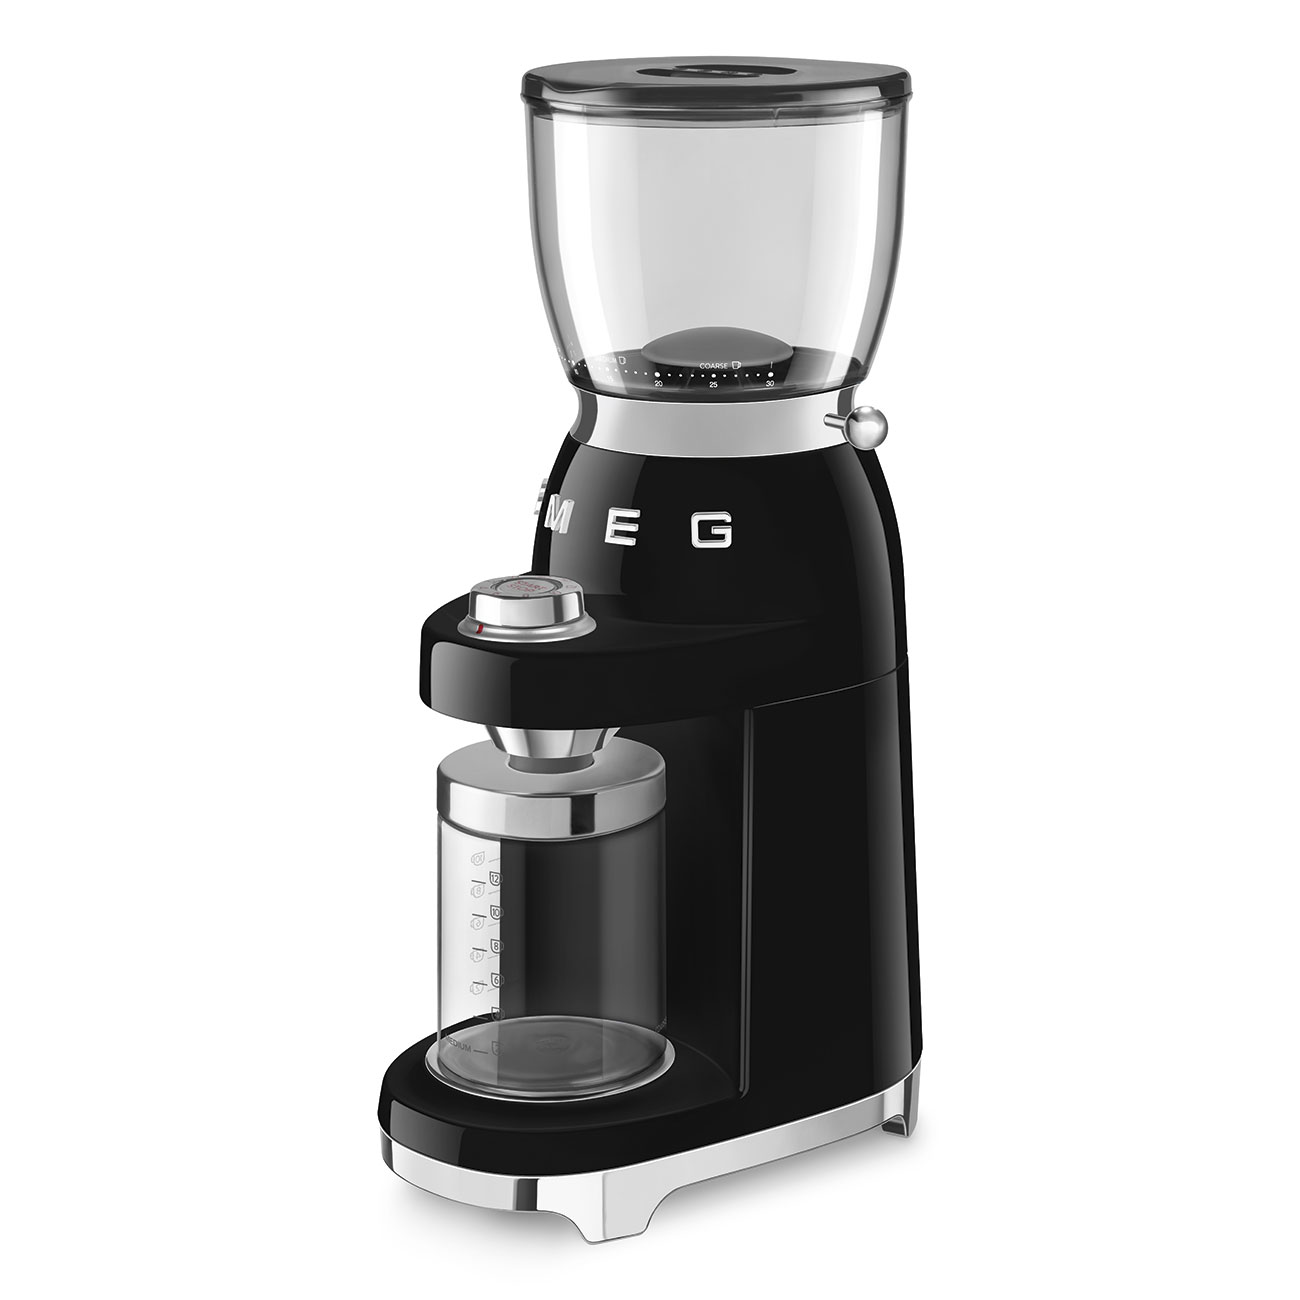 Black Coffee Grinder featuring a conical burr - CGF11BLUK - Smeg_5